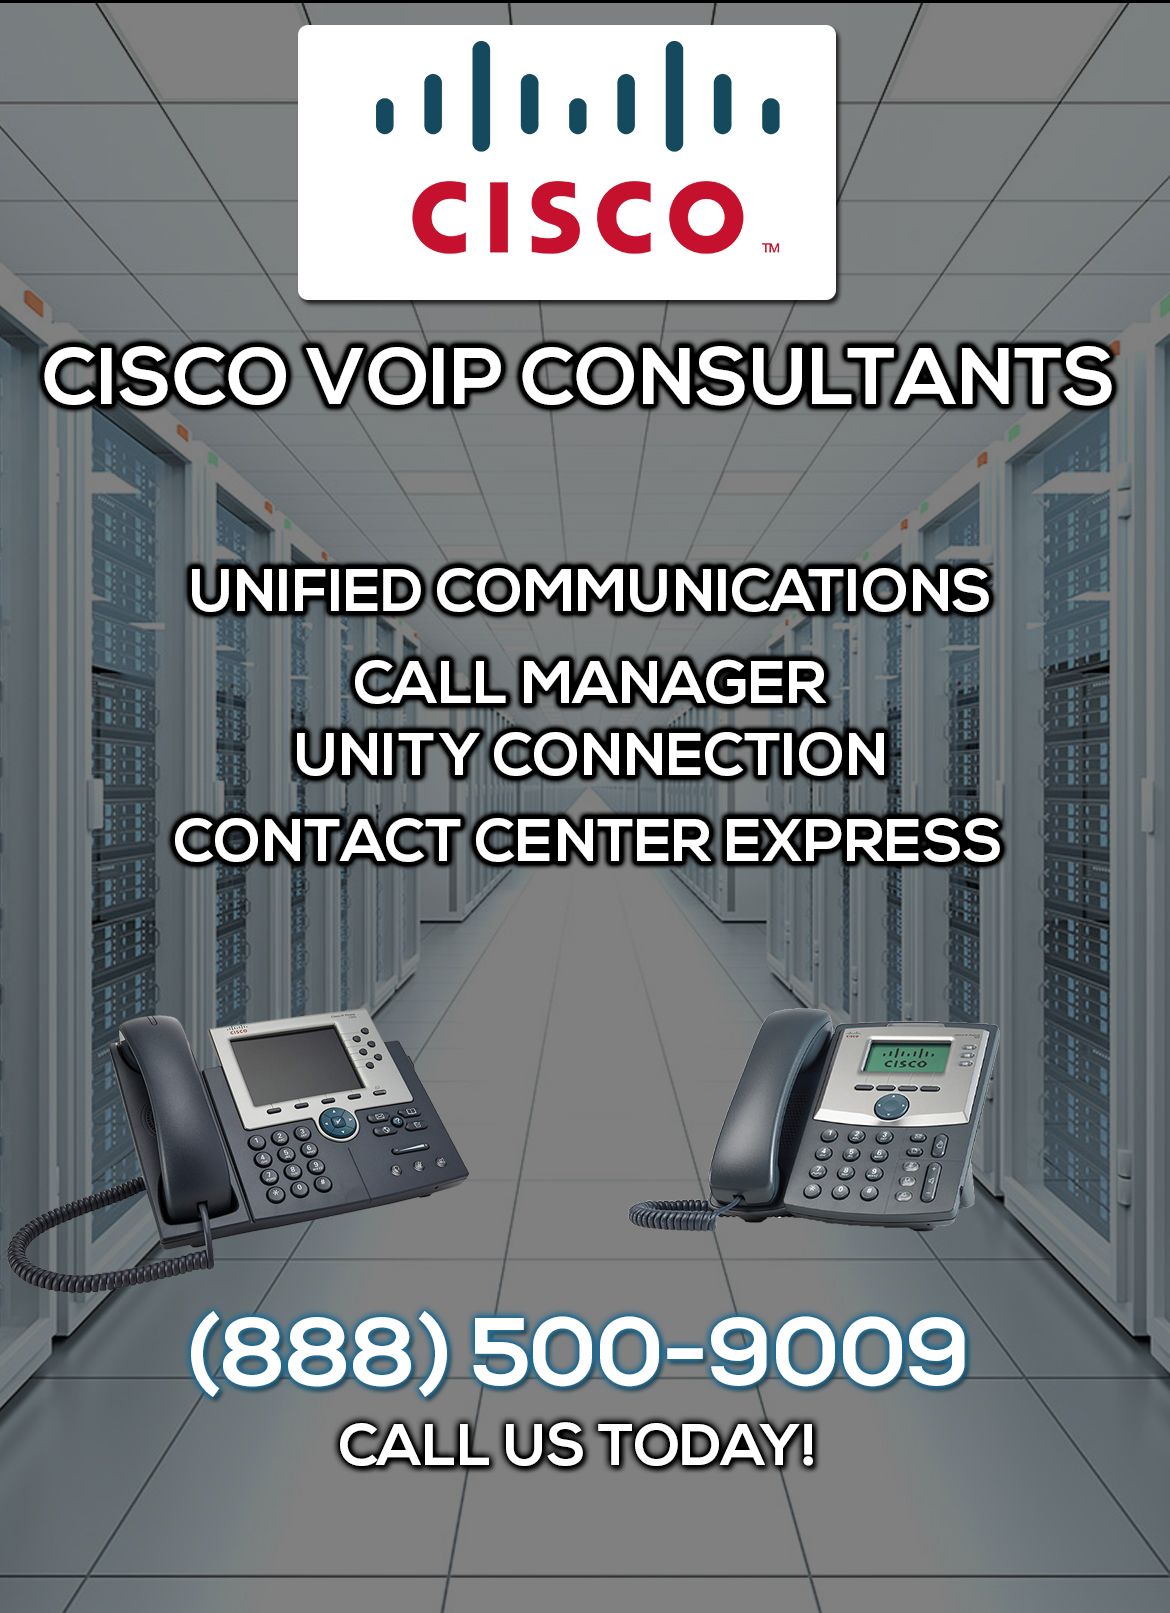 Cisco VoIP Consultants Long Beach